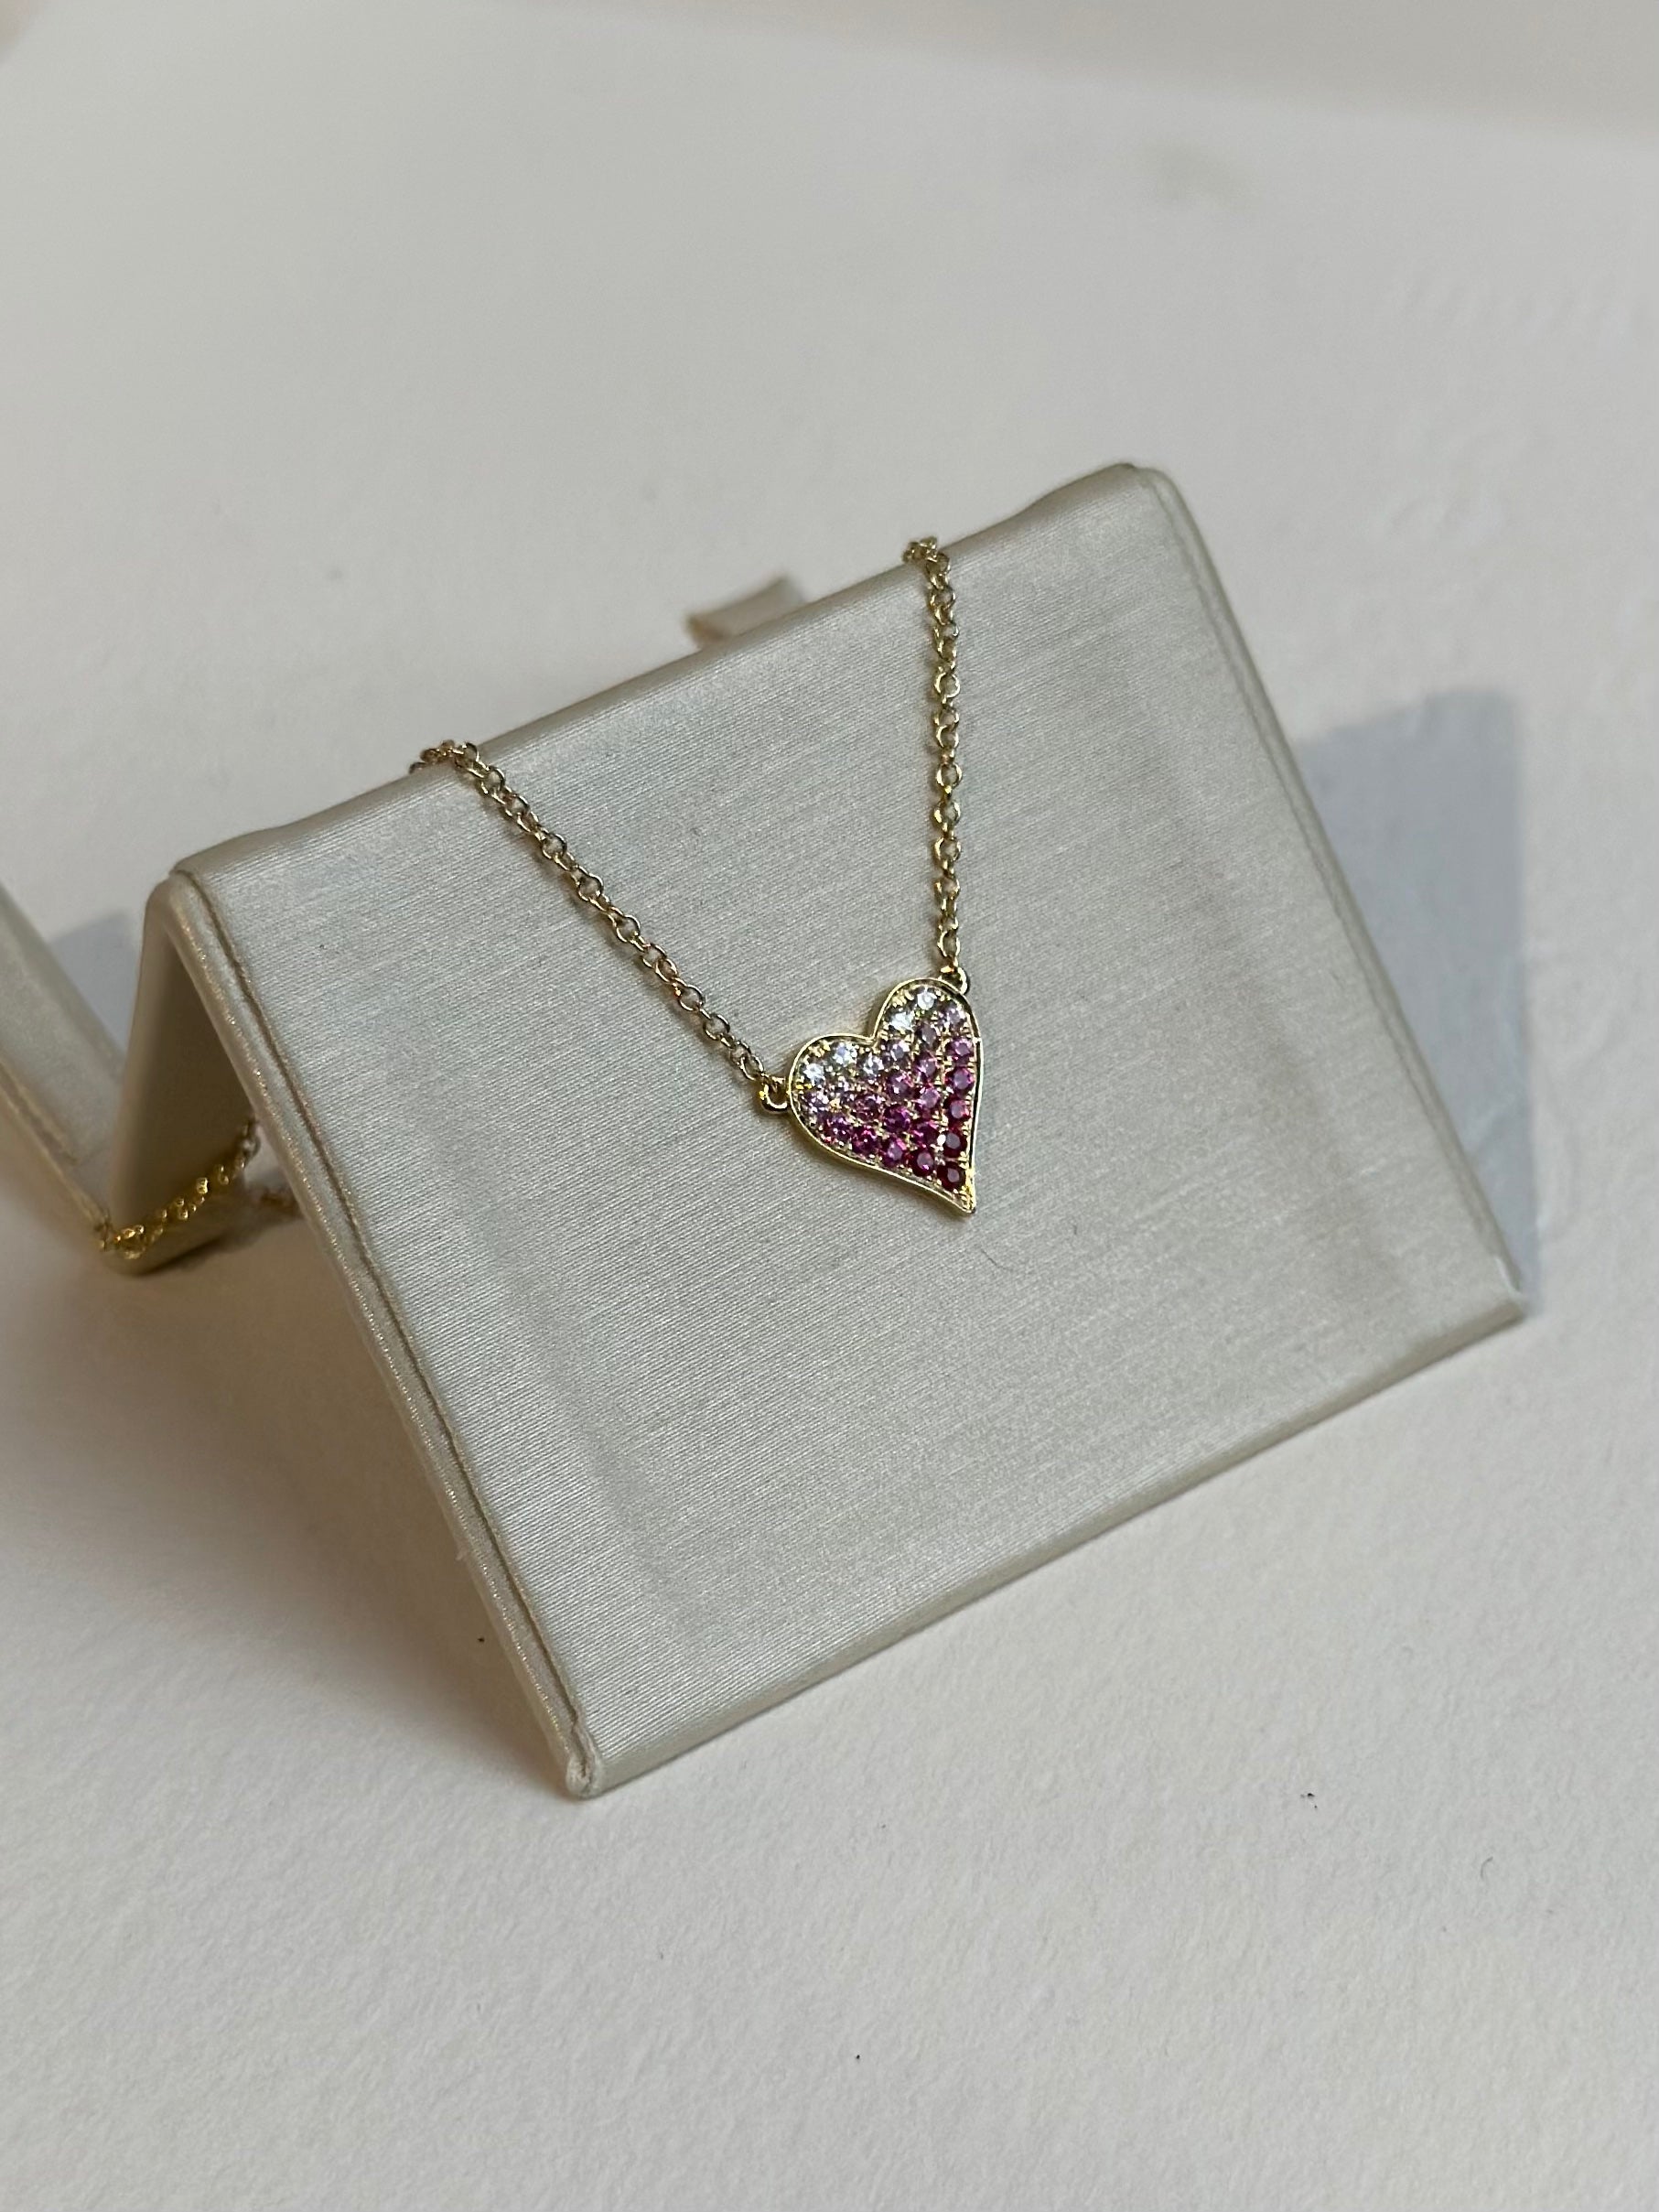 14K Ombre Pink Sapphire & Diamond Heart Necklace